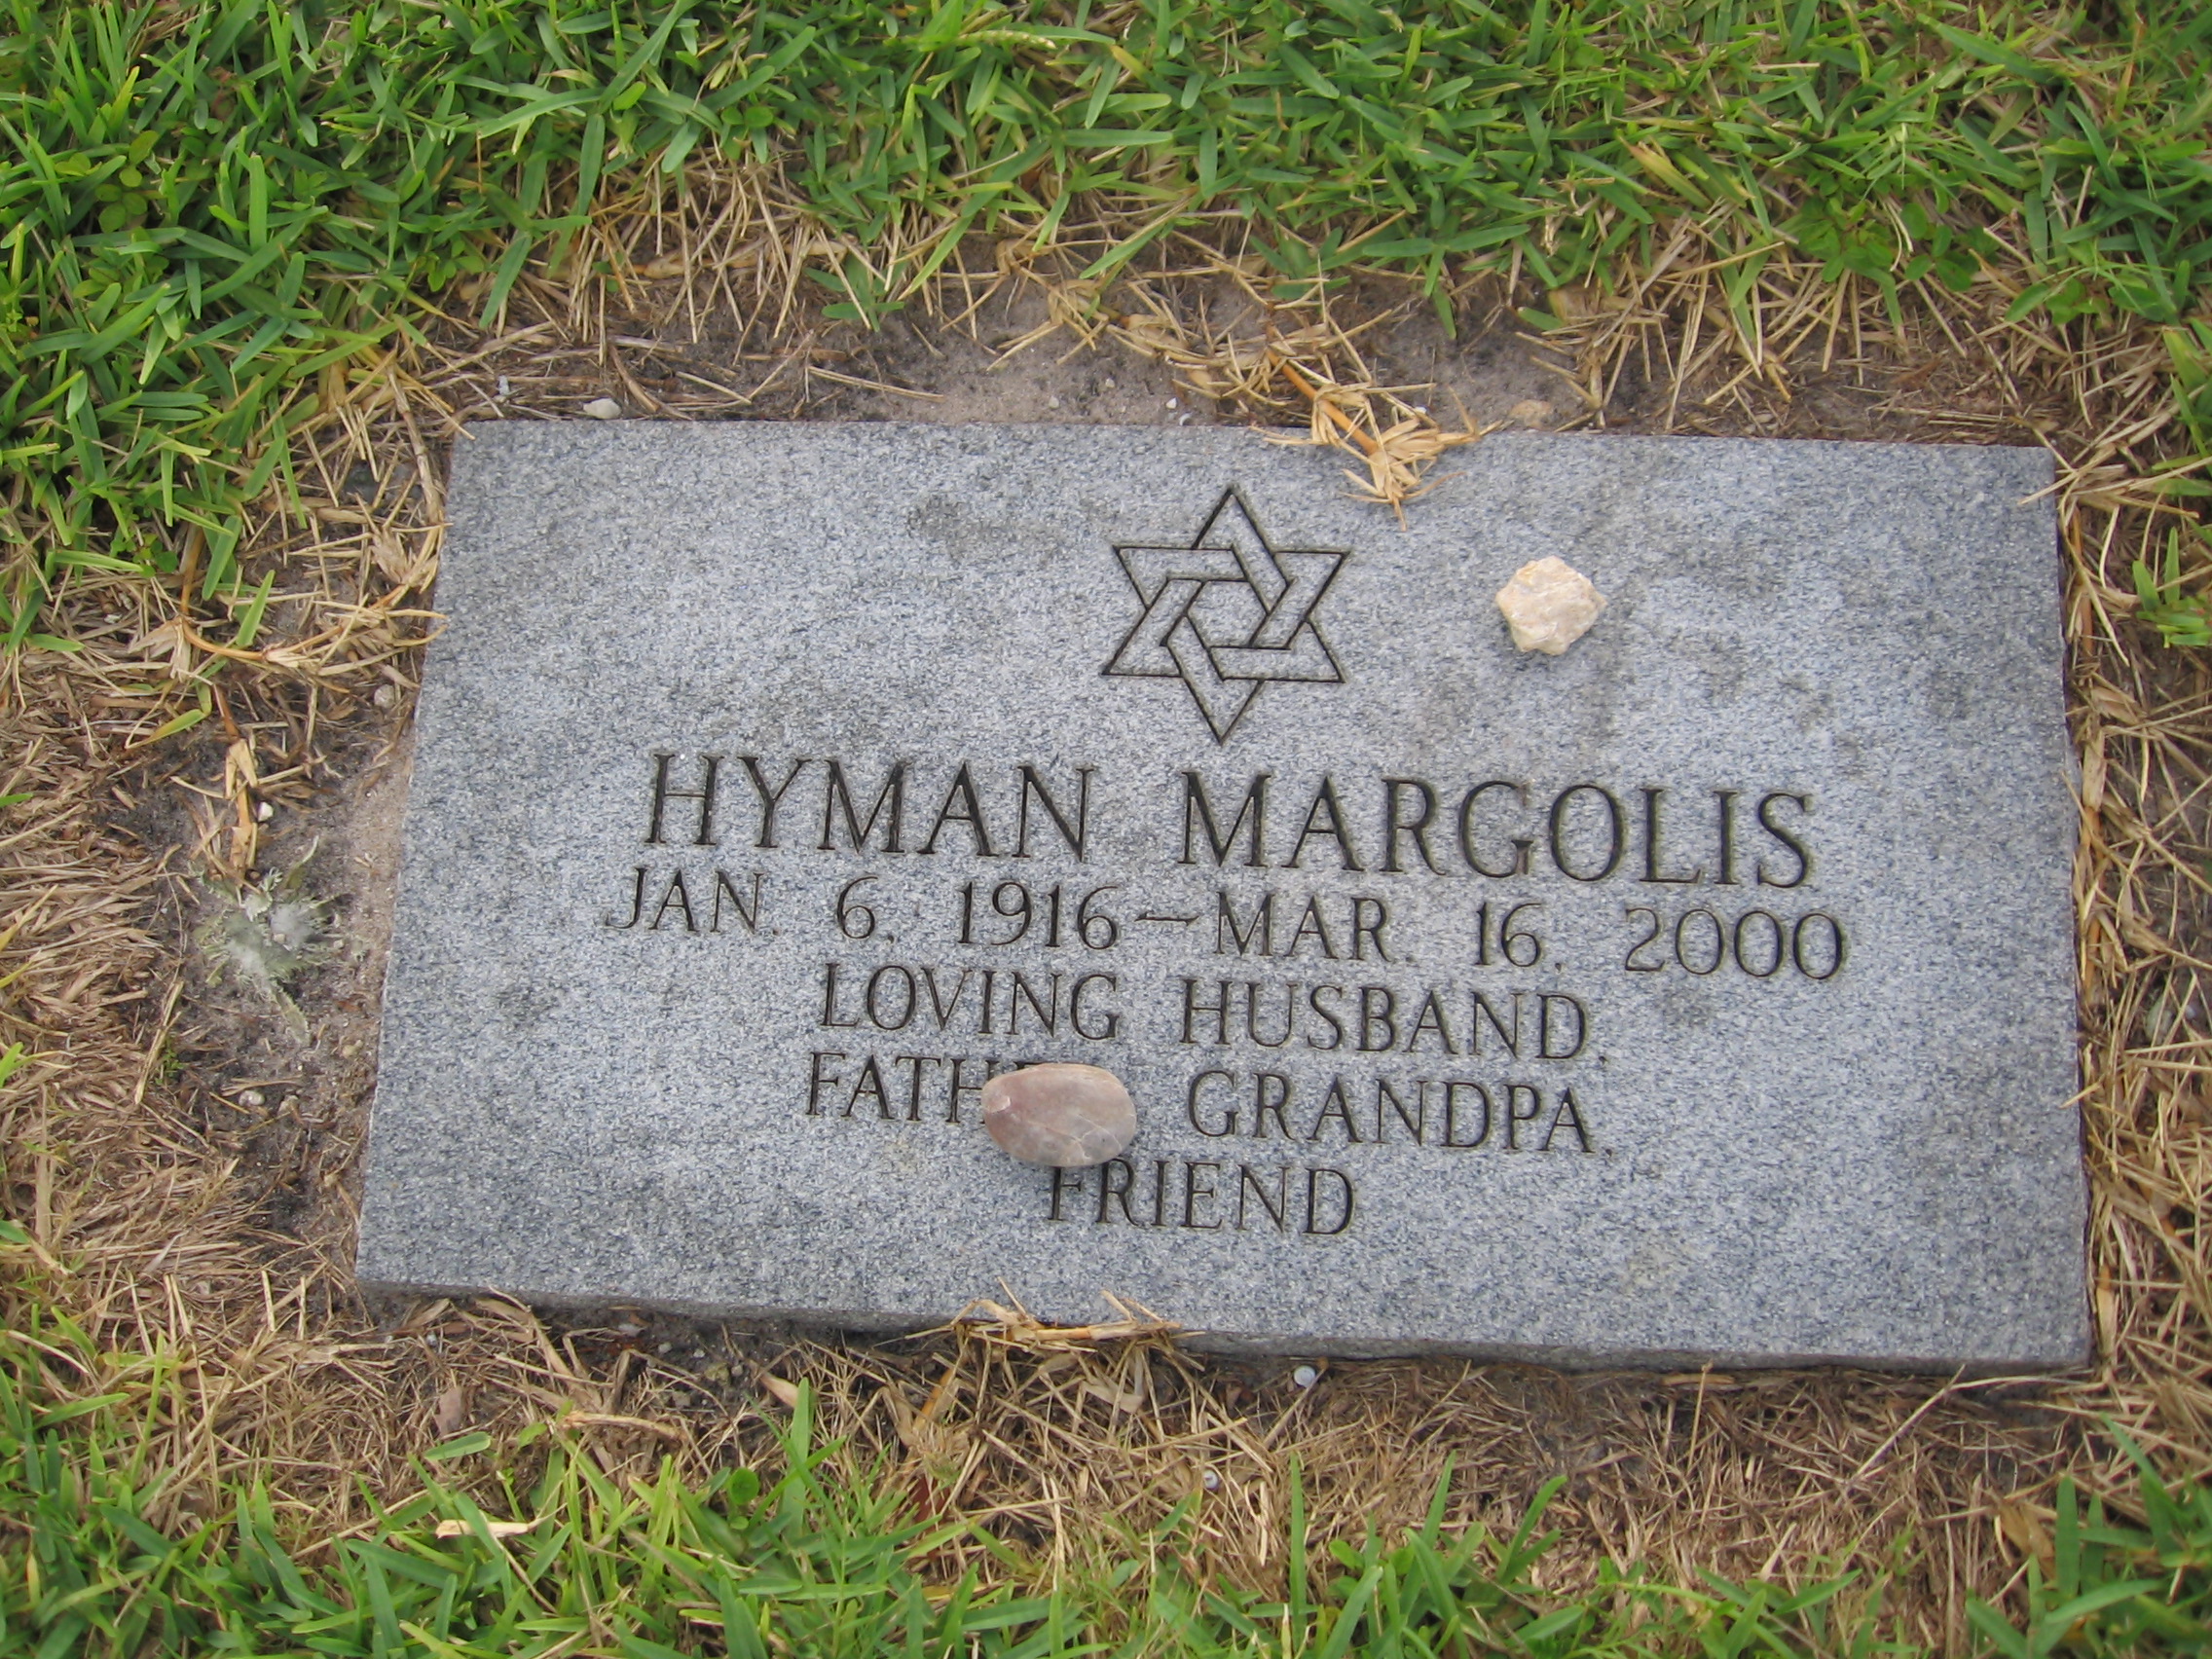 Hyman Margolis